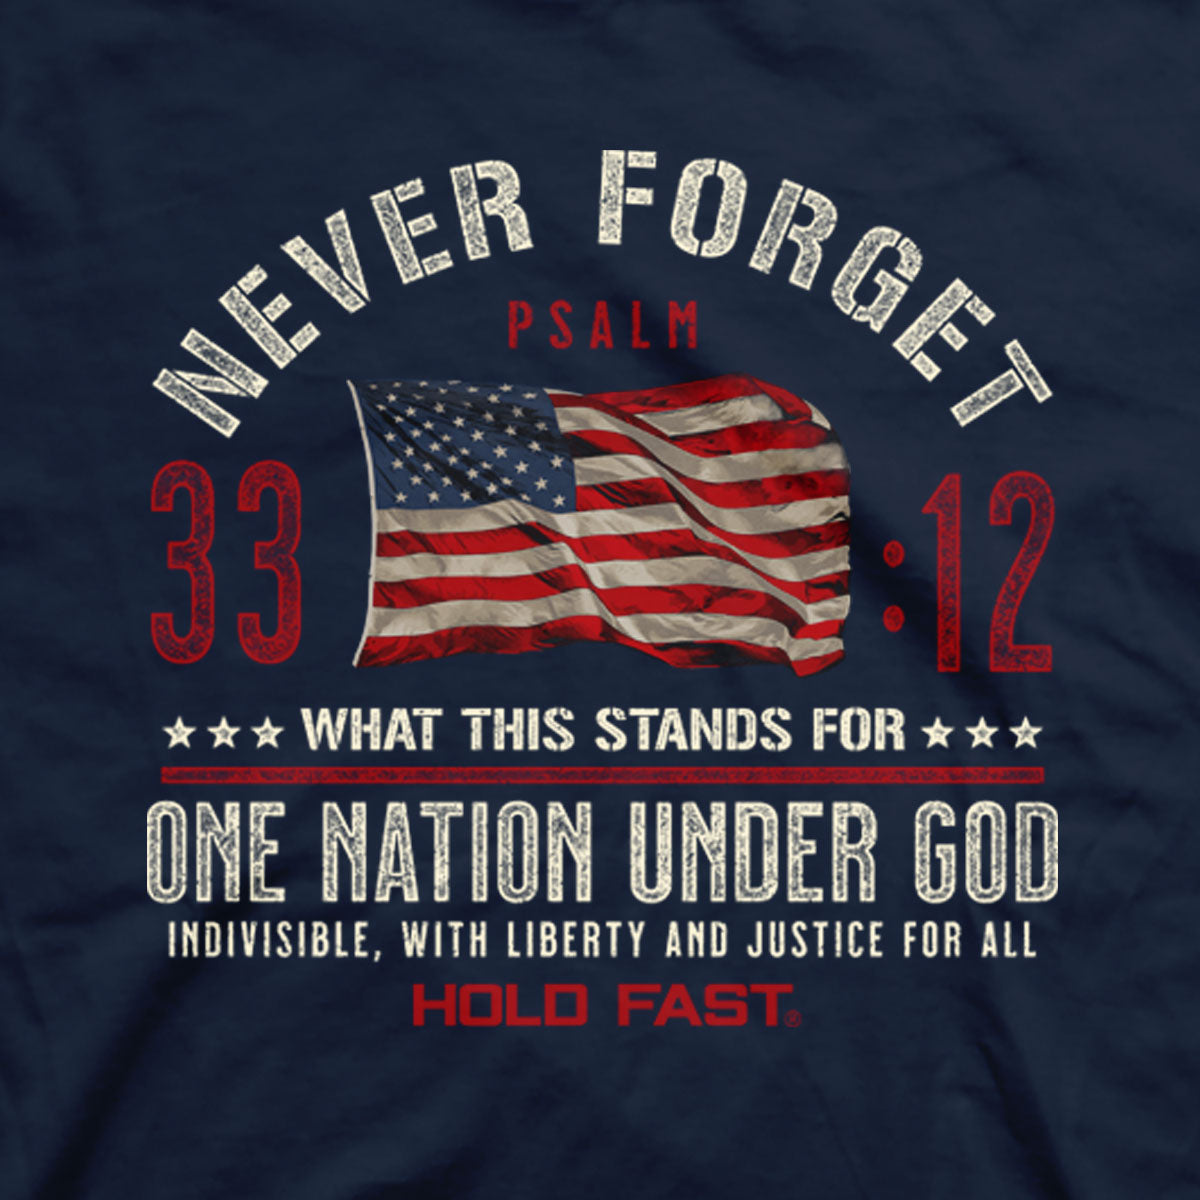 Never Forget One Nation Under God Mens T-Shirt